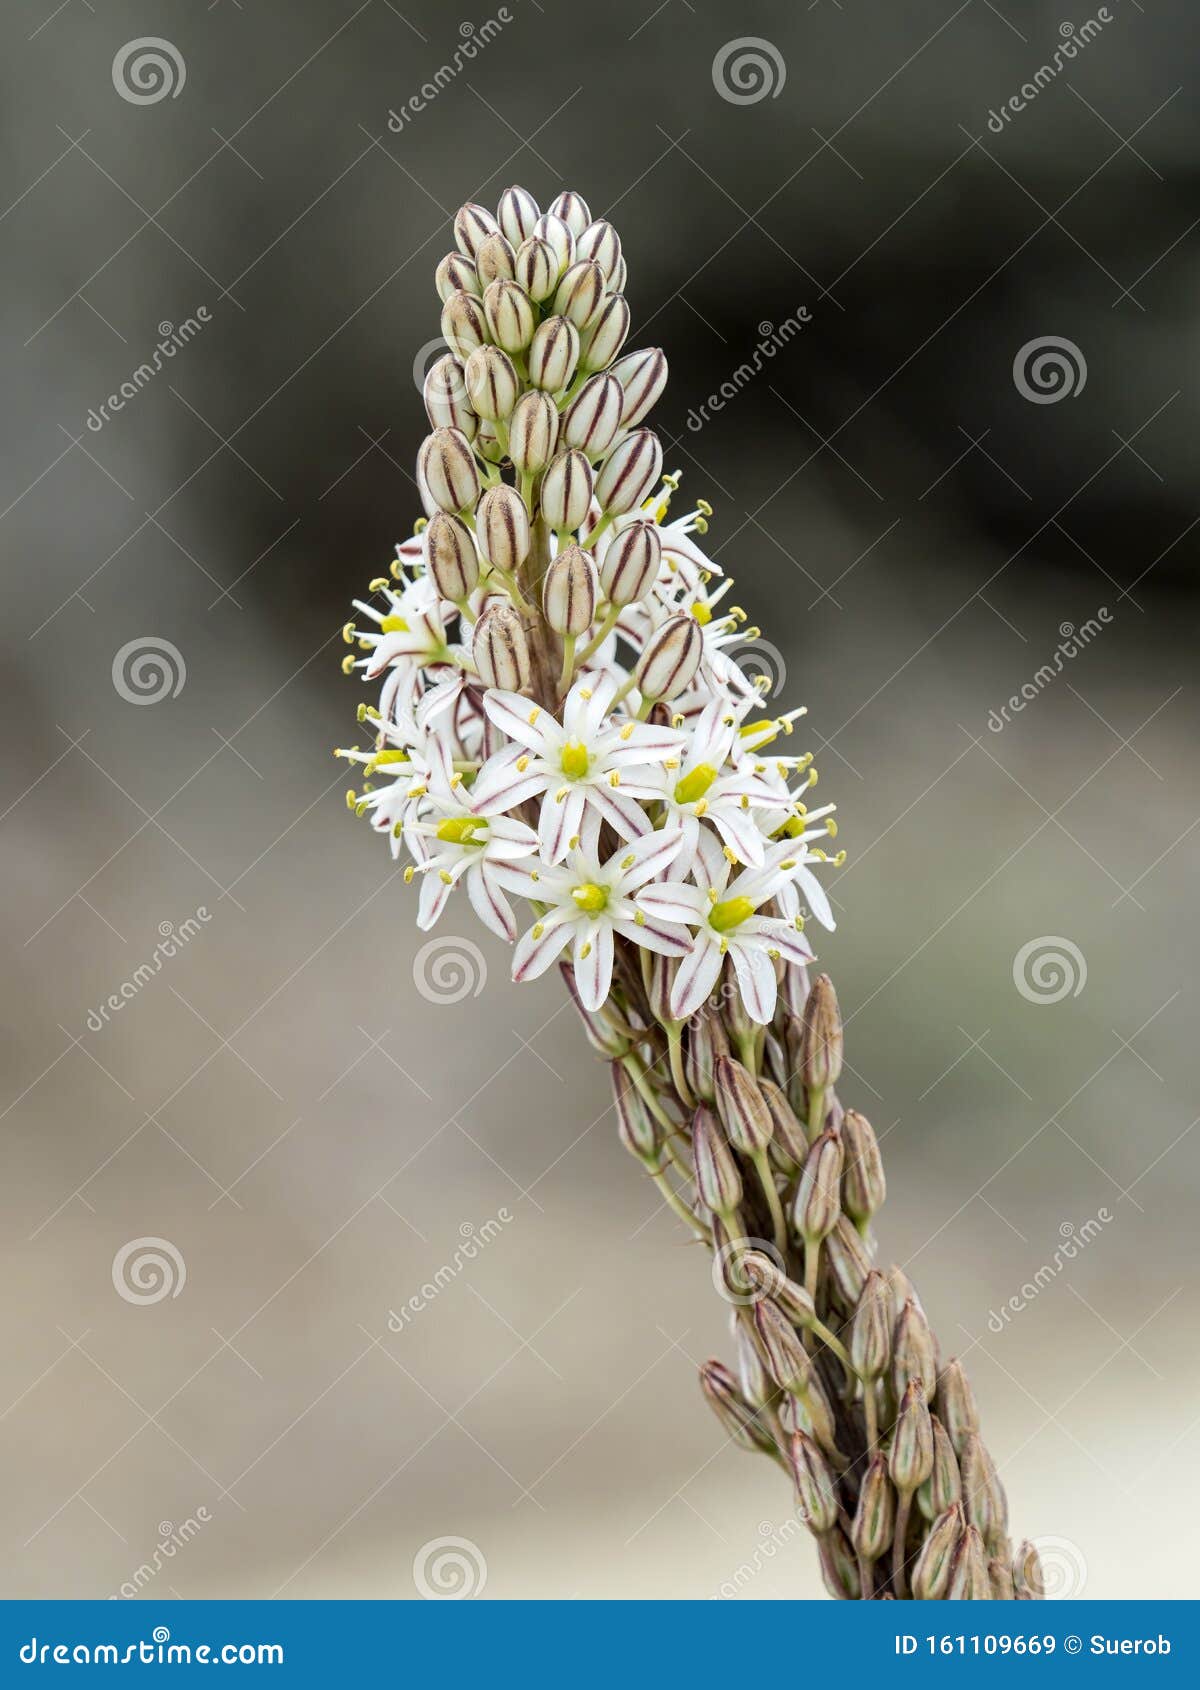 asphodel flowers in andalucia in spain